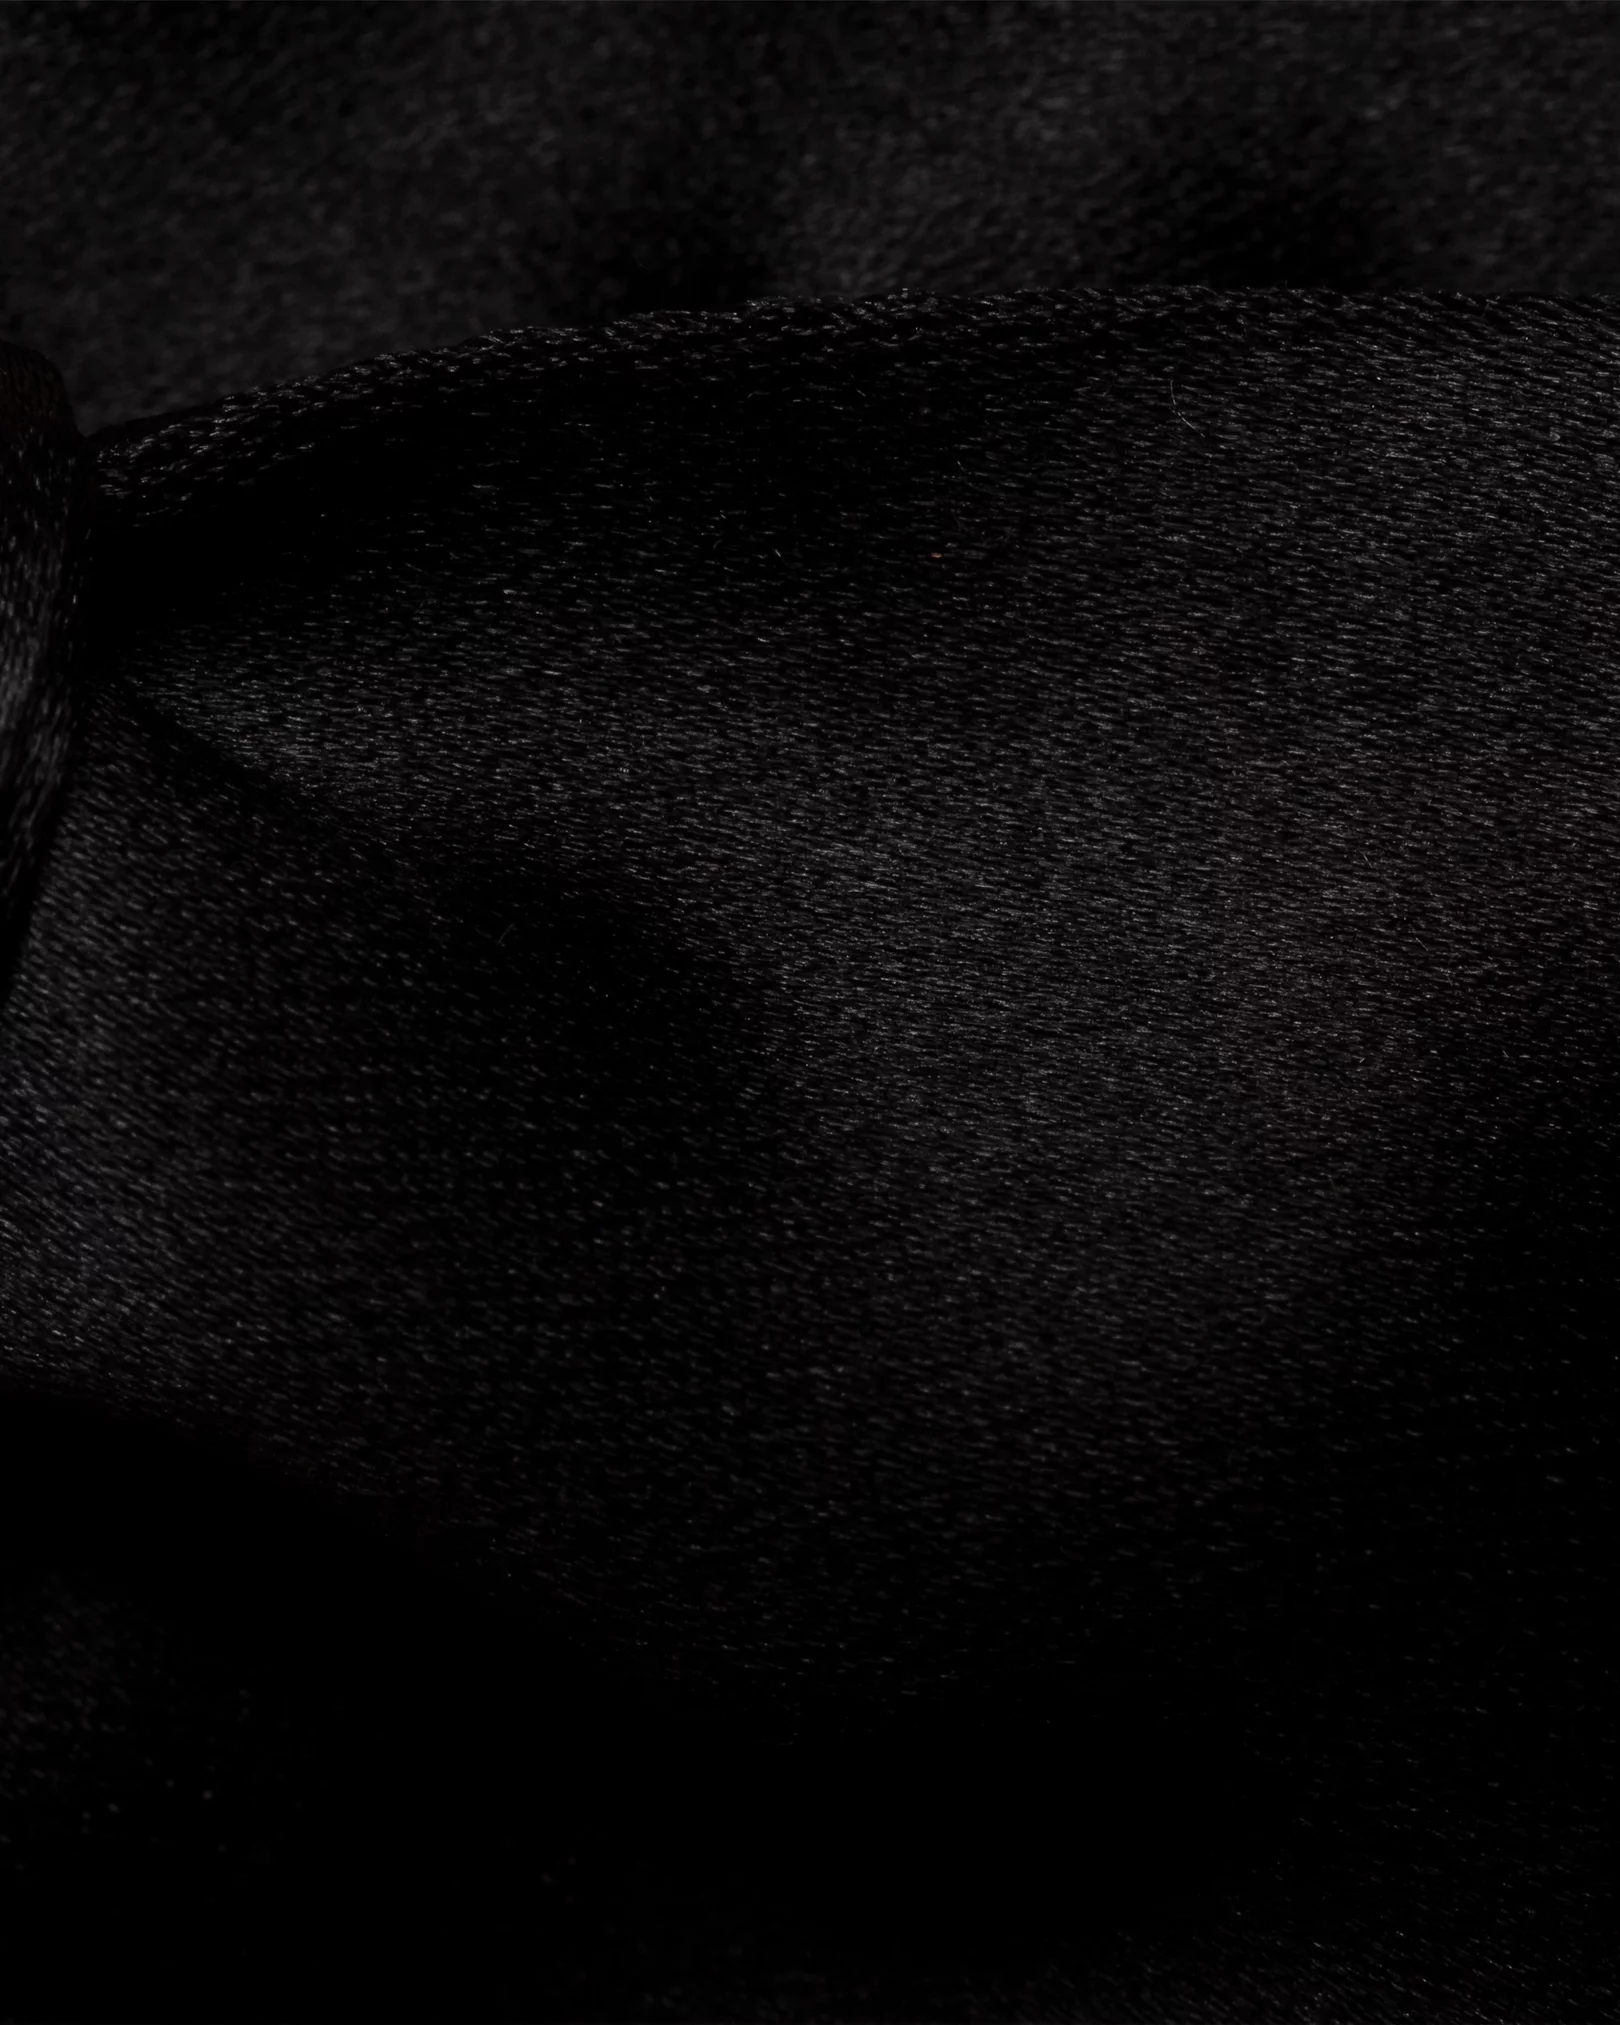 Black Silk Bow Tie – Ready Tied